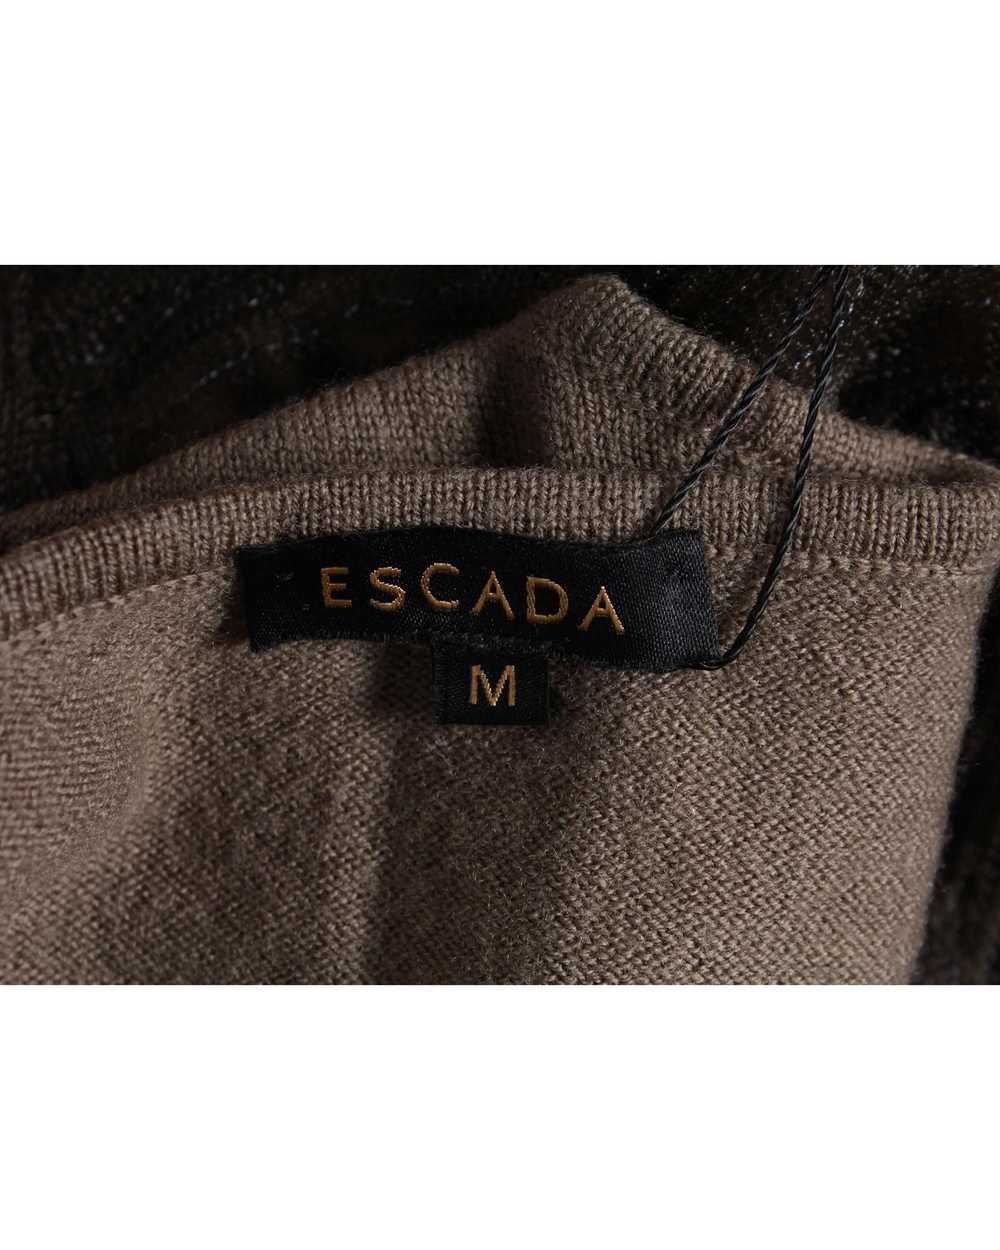 Escada Brown Wool Sleeveless Printed Top - image 4